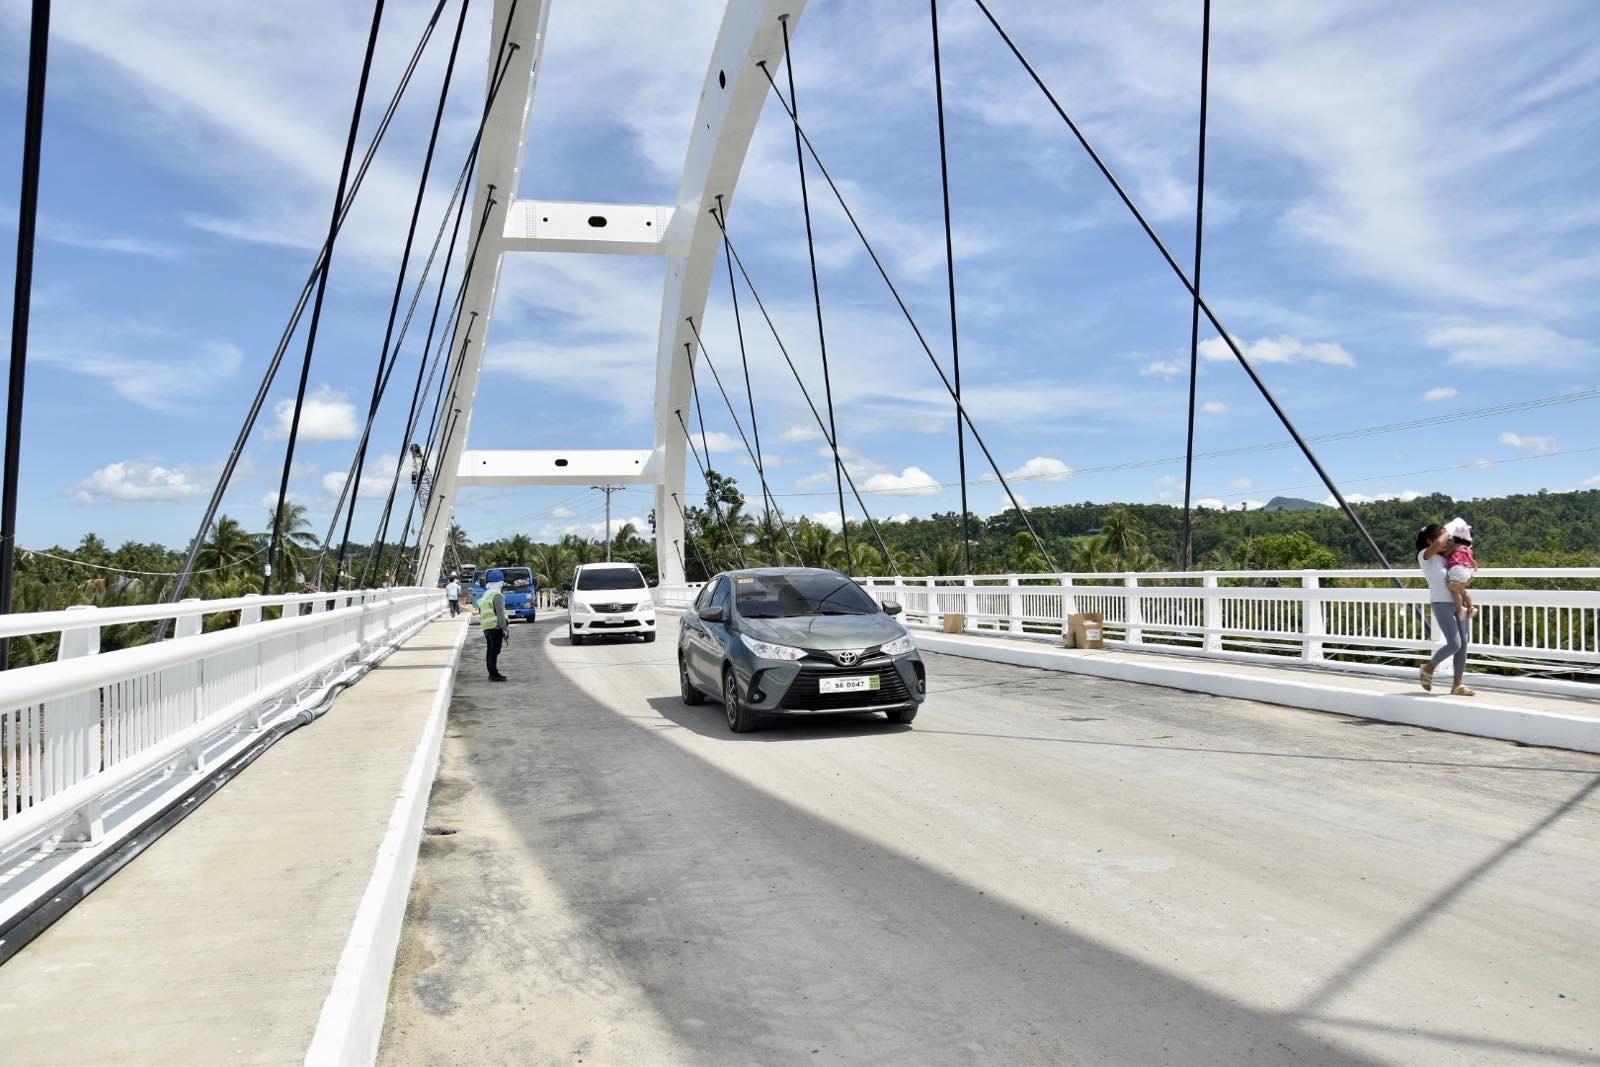 DPWH akan membuka jembatan Loay, Bohol baru untuk lalu lintas 2 arah pada bulan Juni Berita GMA Online